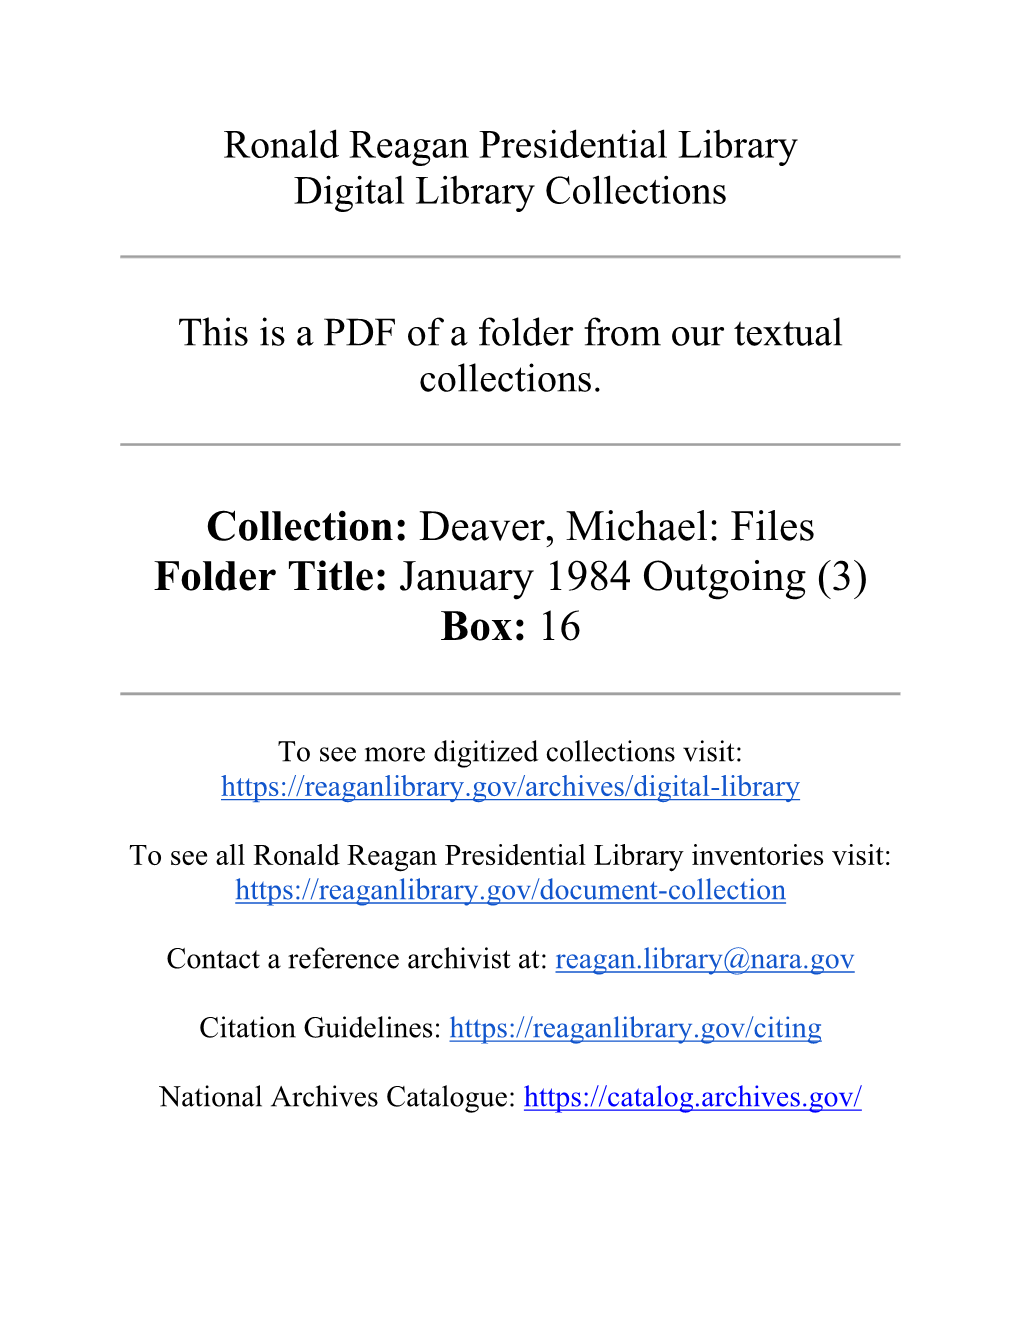 Deaver, Michael: Files Folder Title: January 1984 Outgoing (3) Box: 16